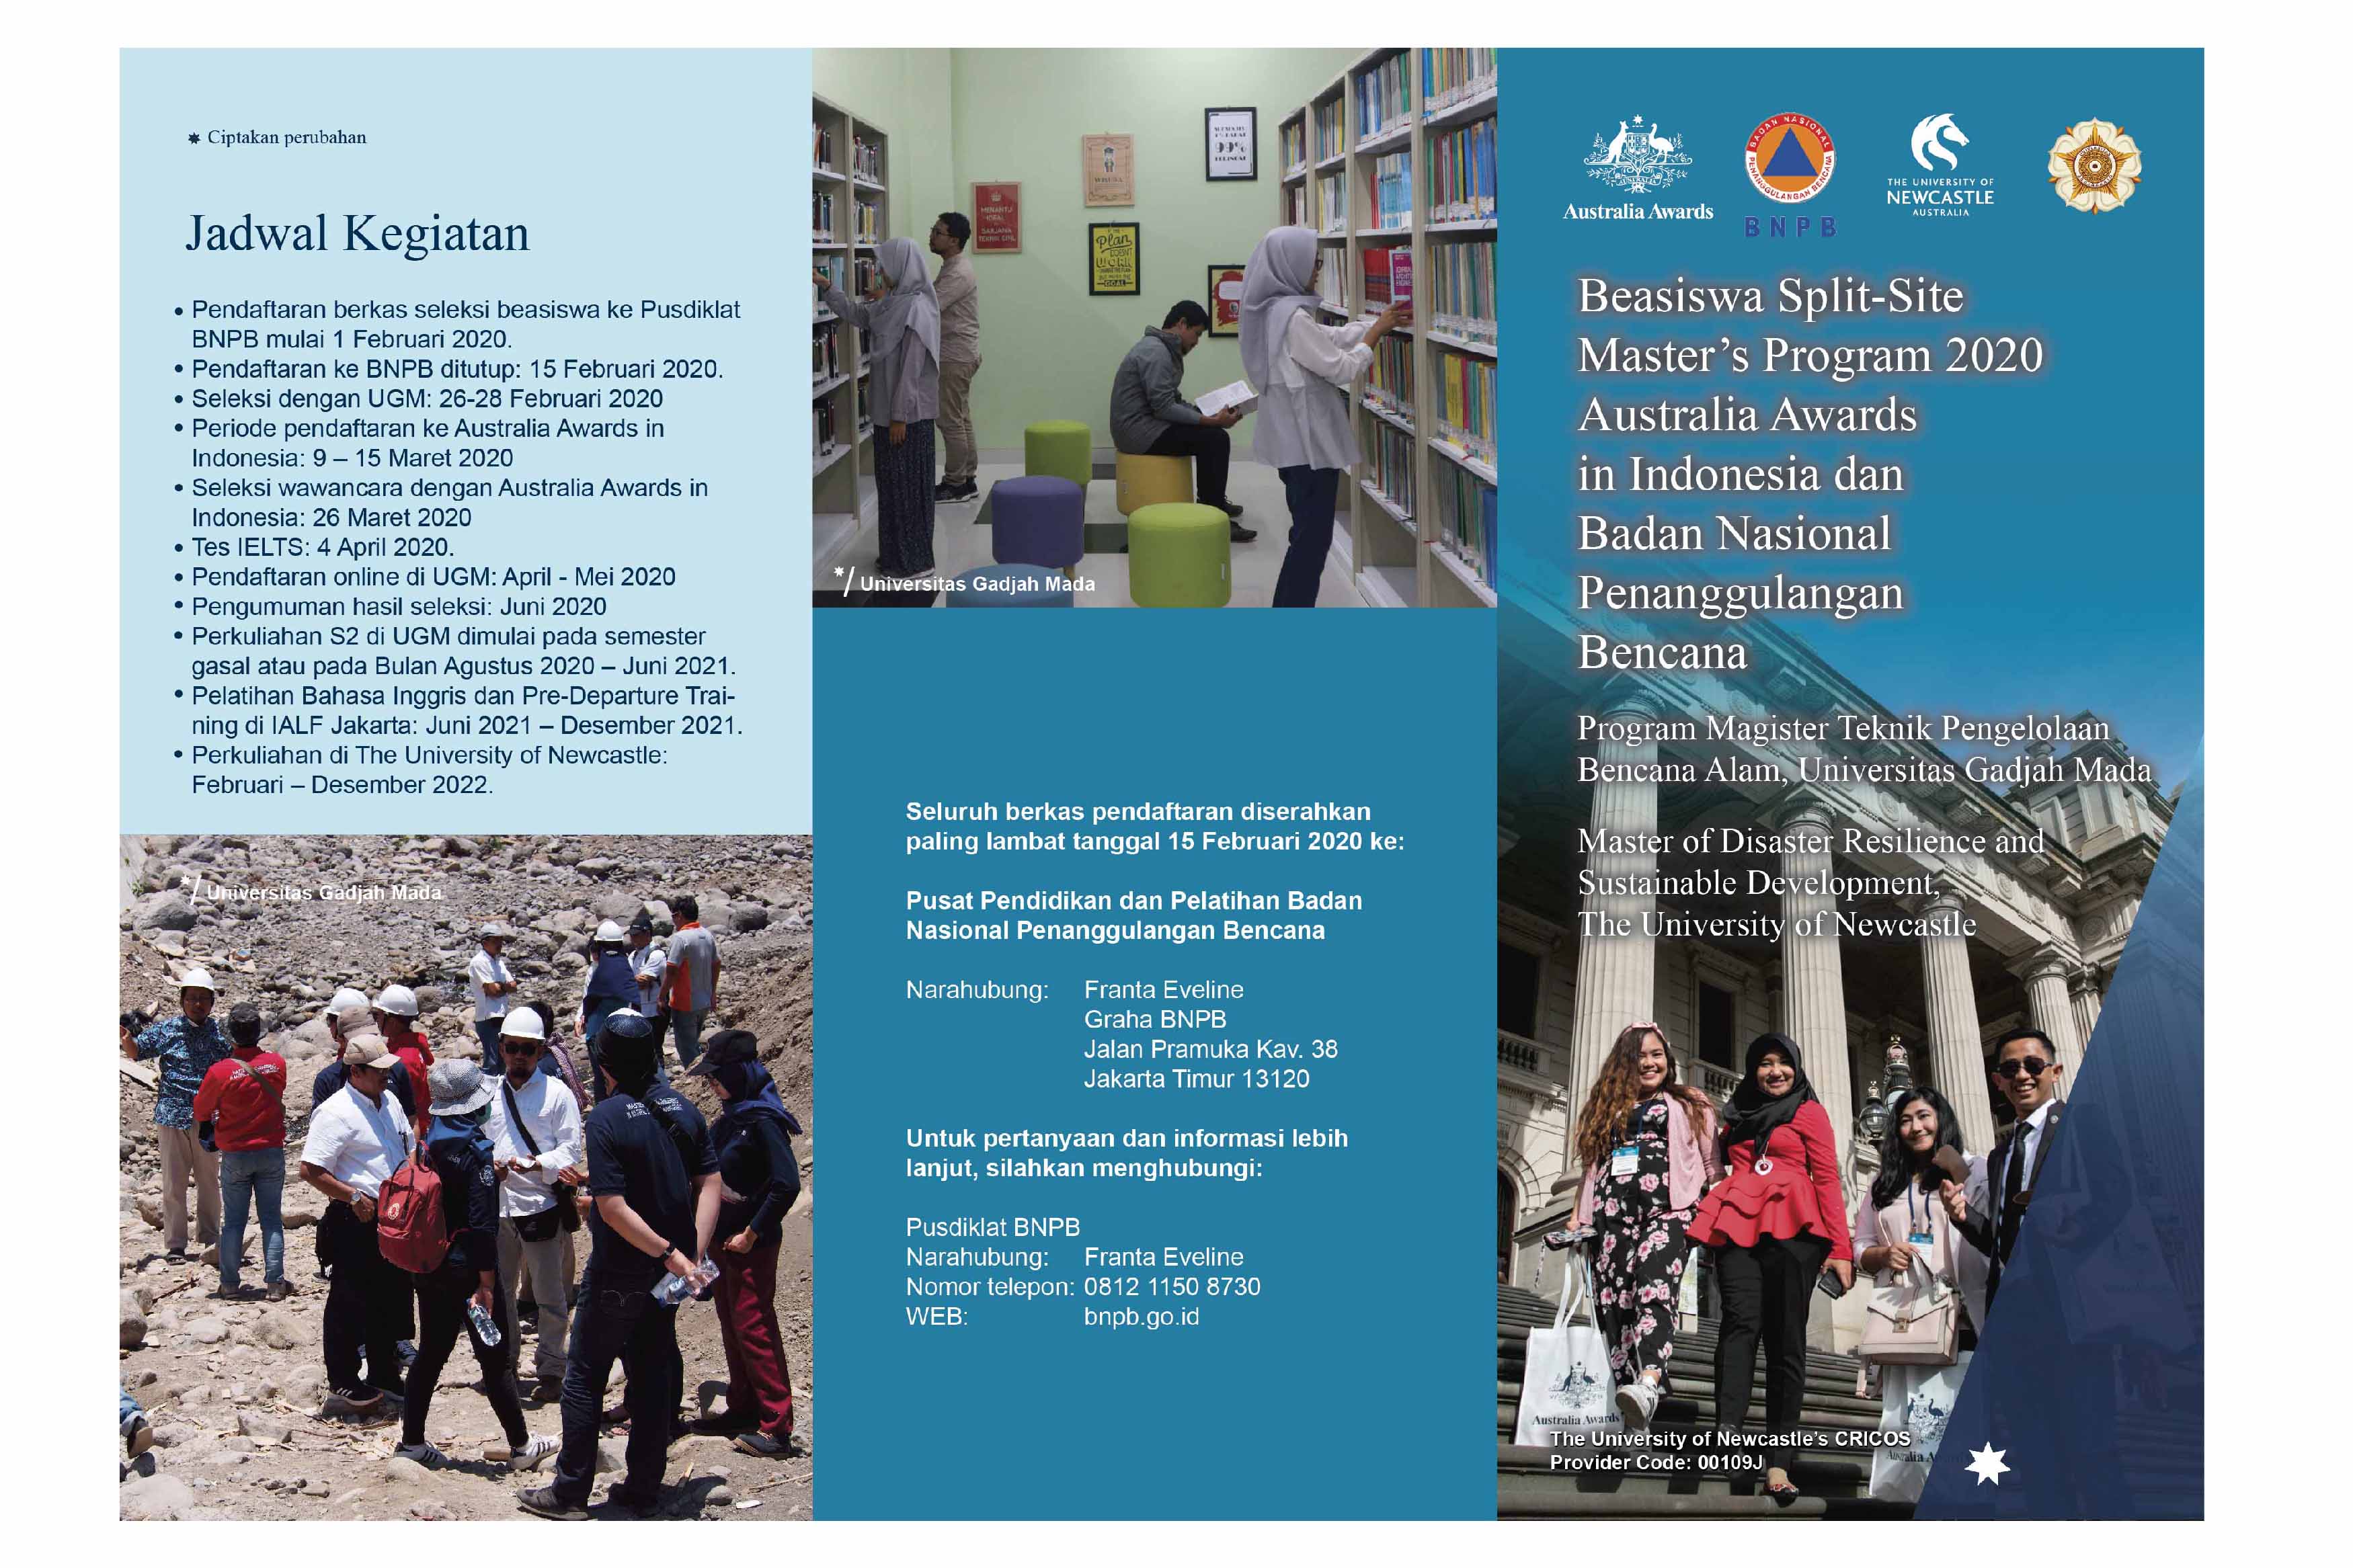 Split-Site Master's Scholarship Program 2020 for Civil Servants at the BNPB